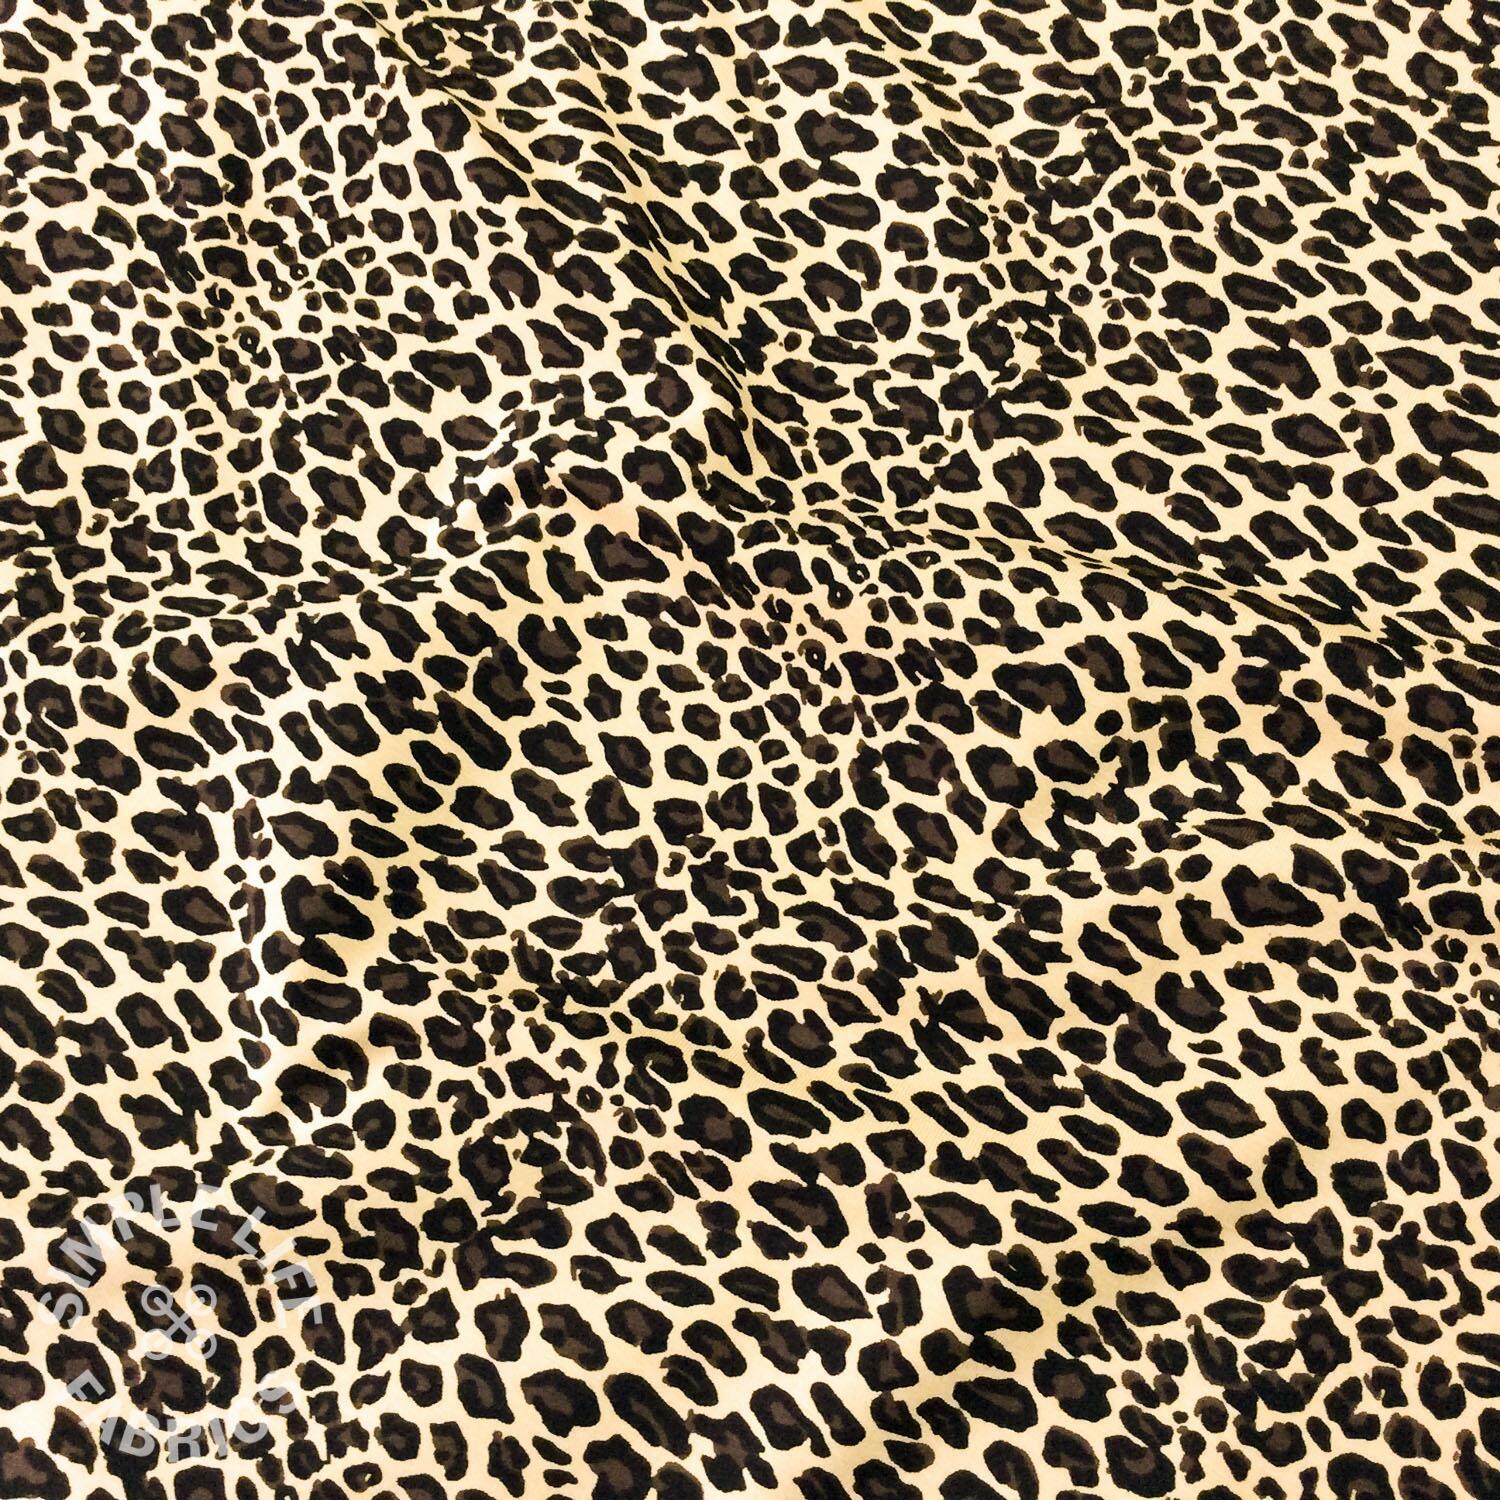 Classic animal leopard print jersey fabric